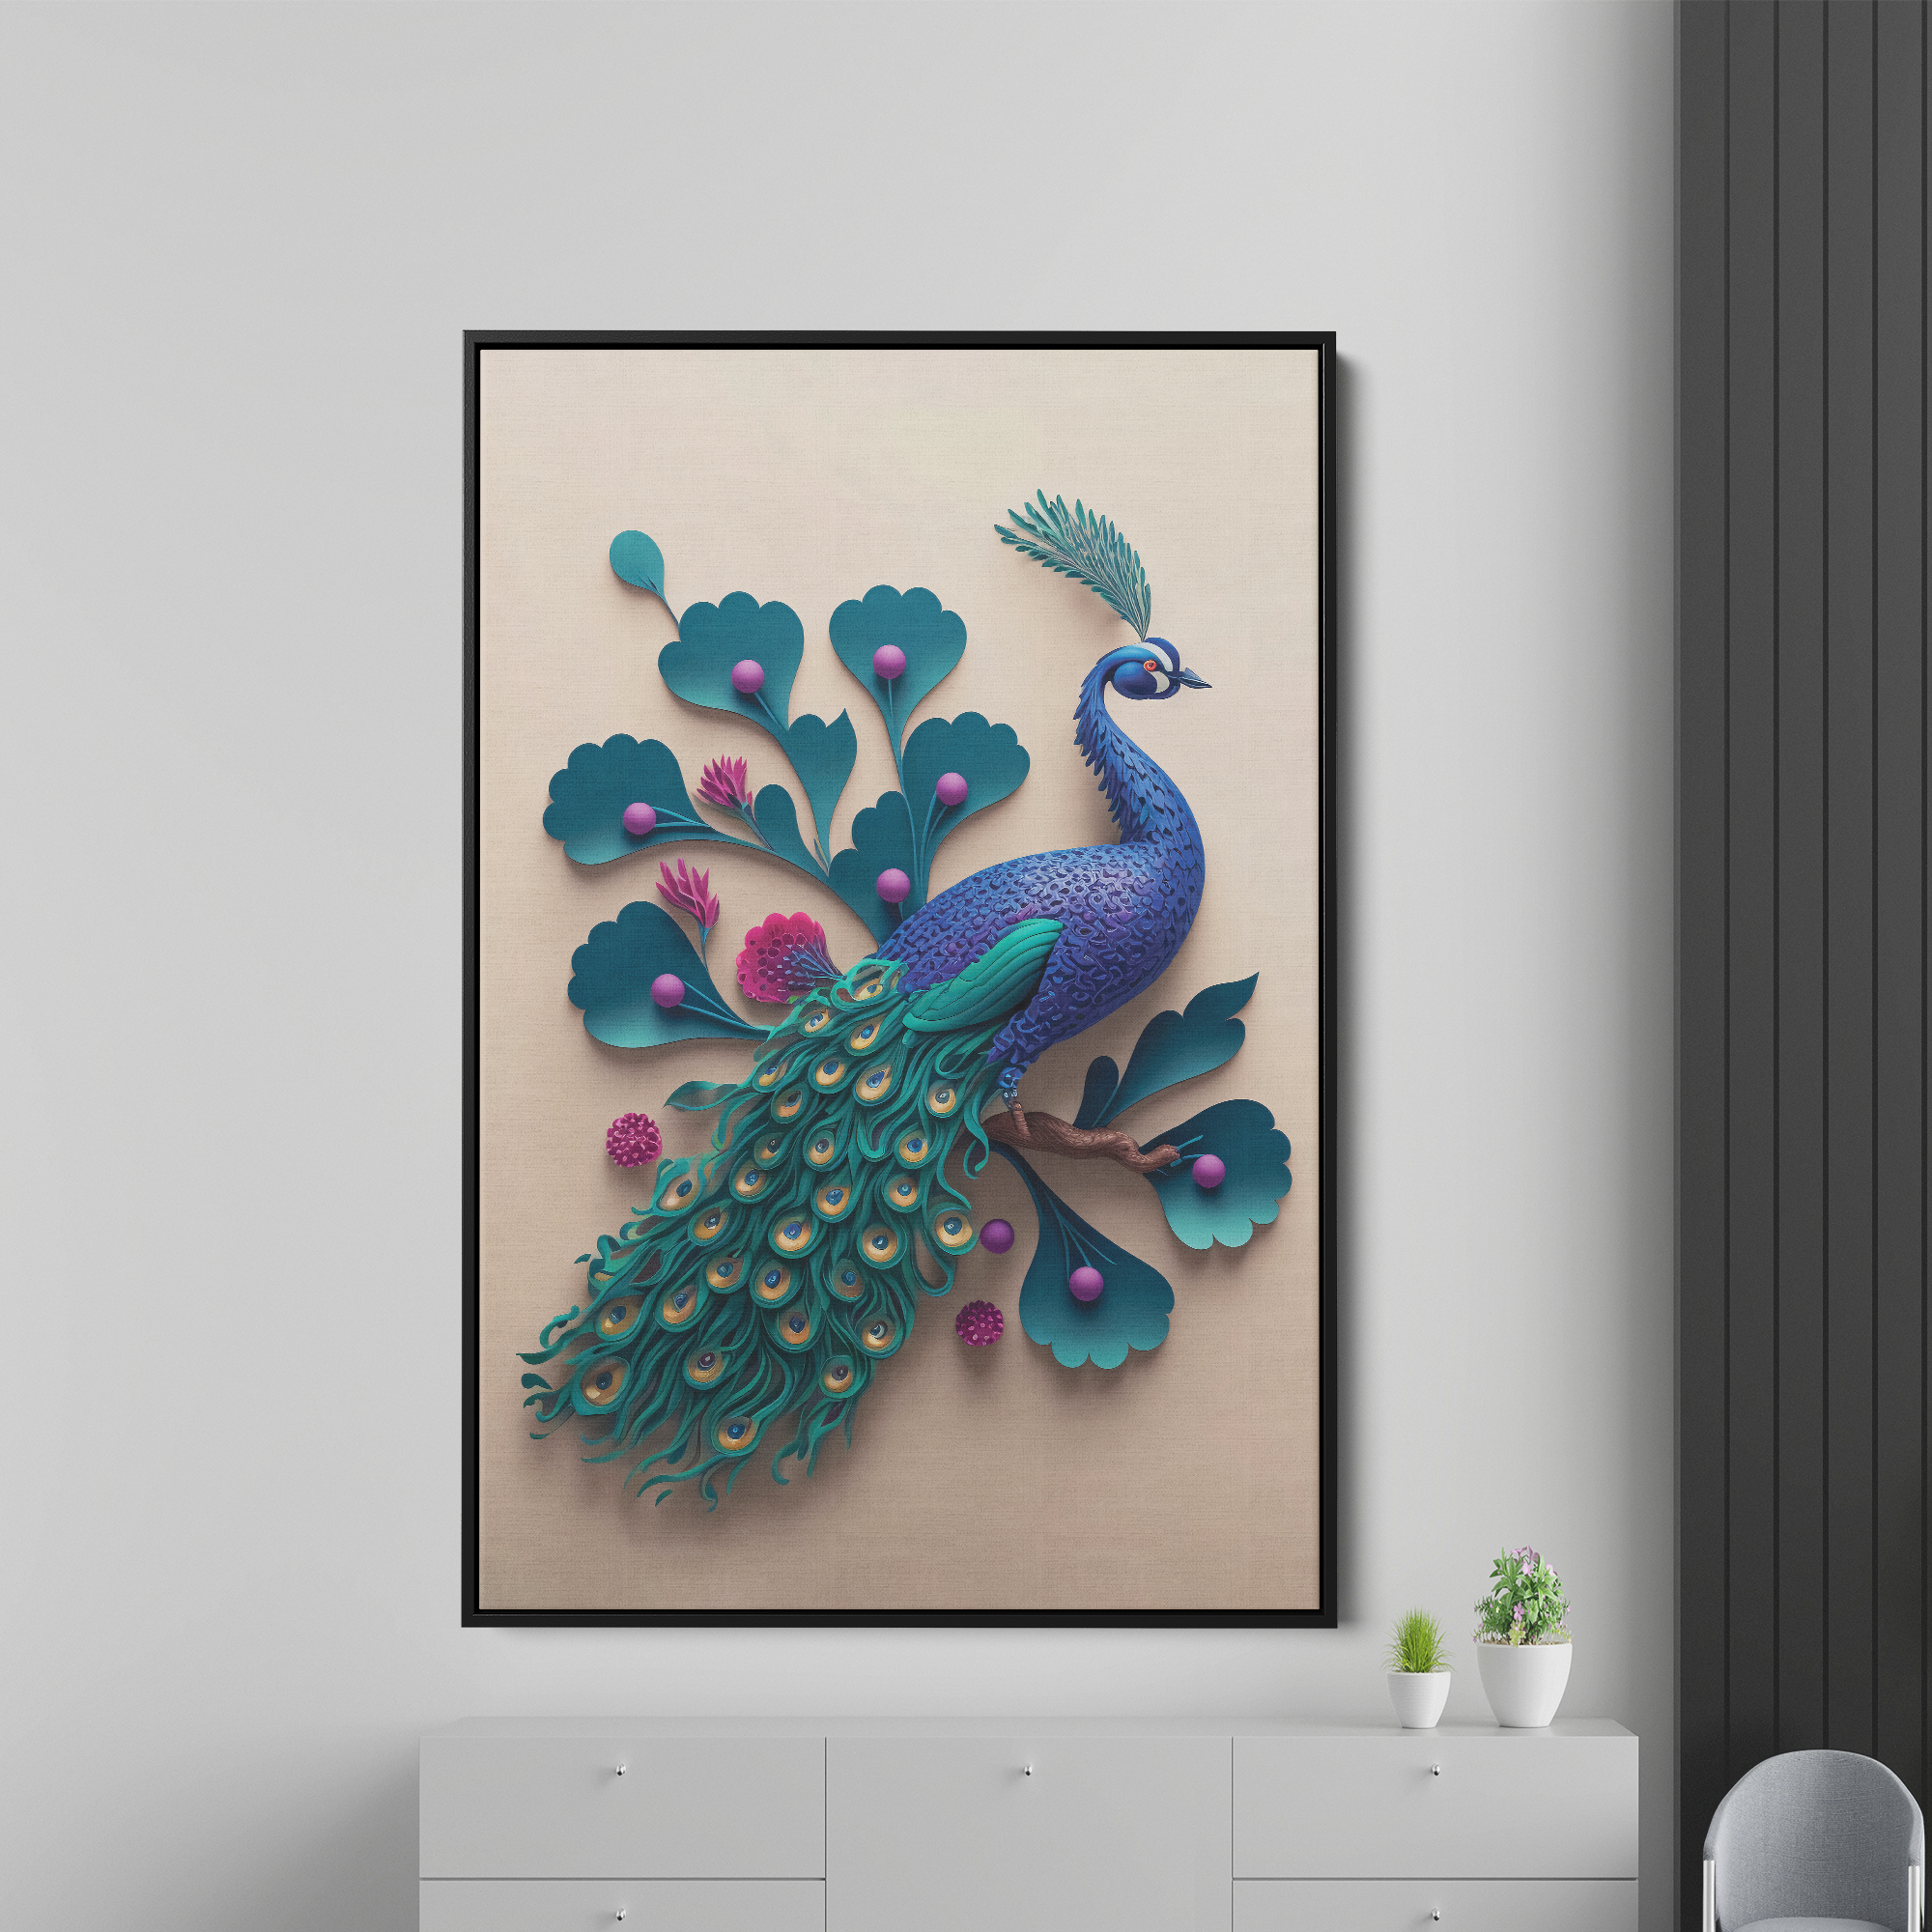 Random Peacock Bird Canvas Wall Painting